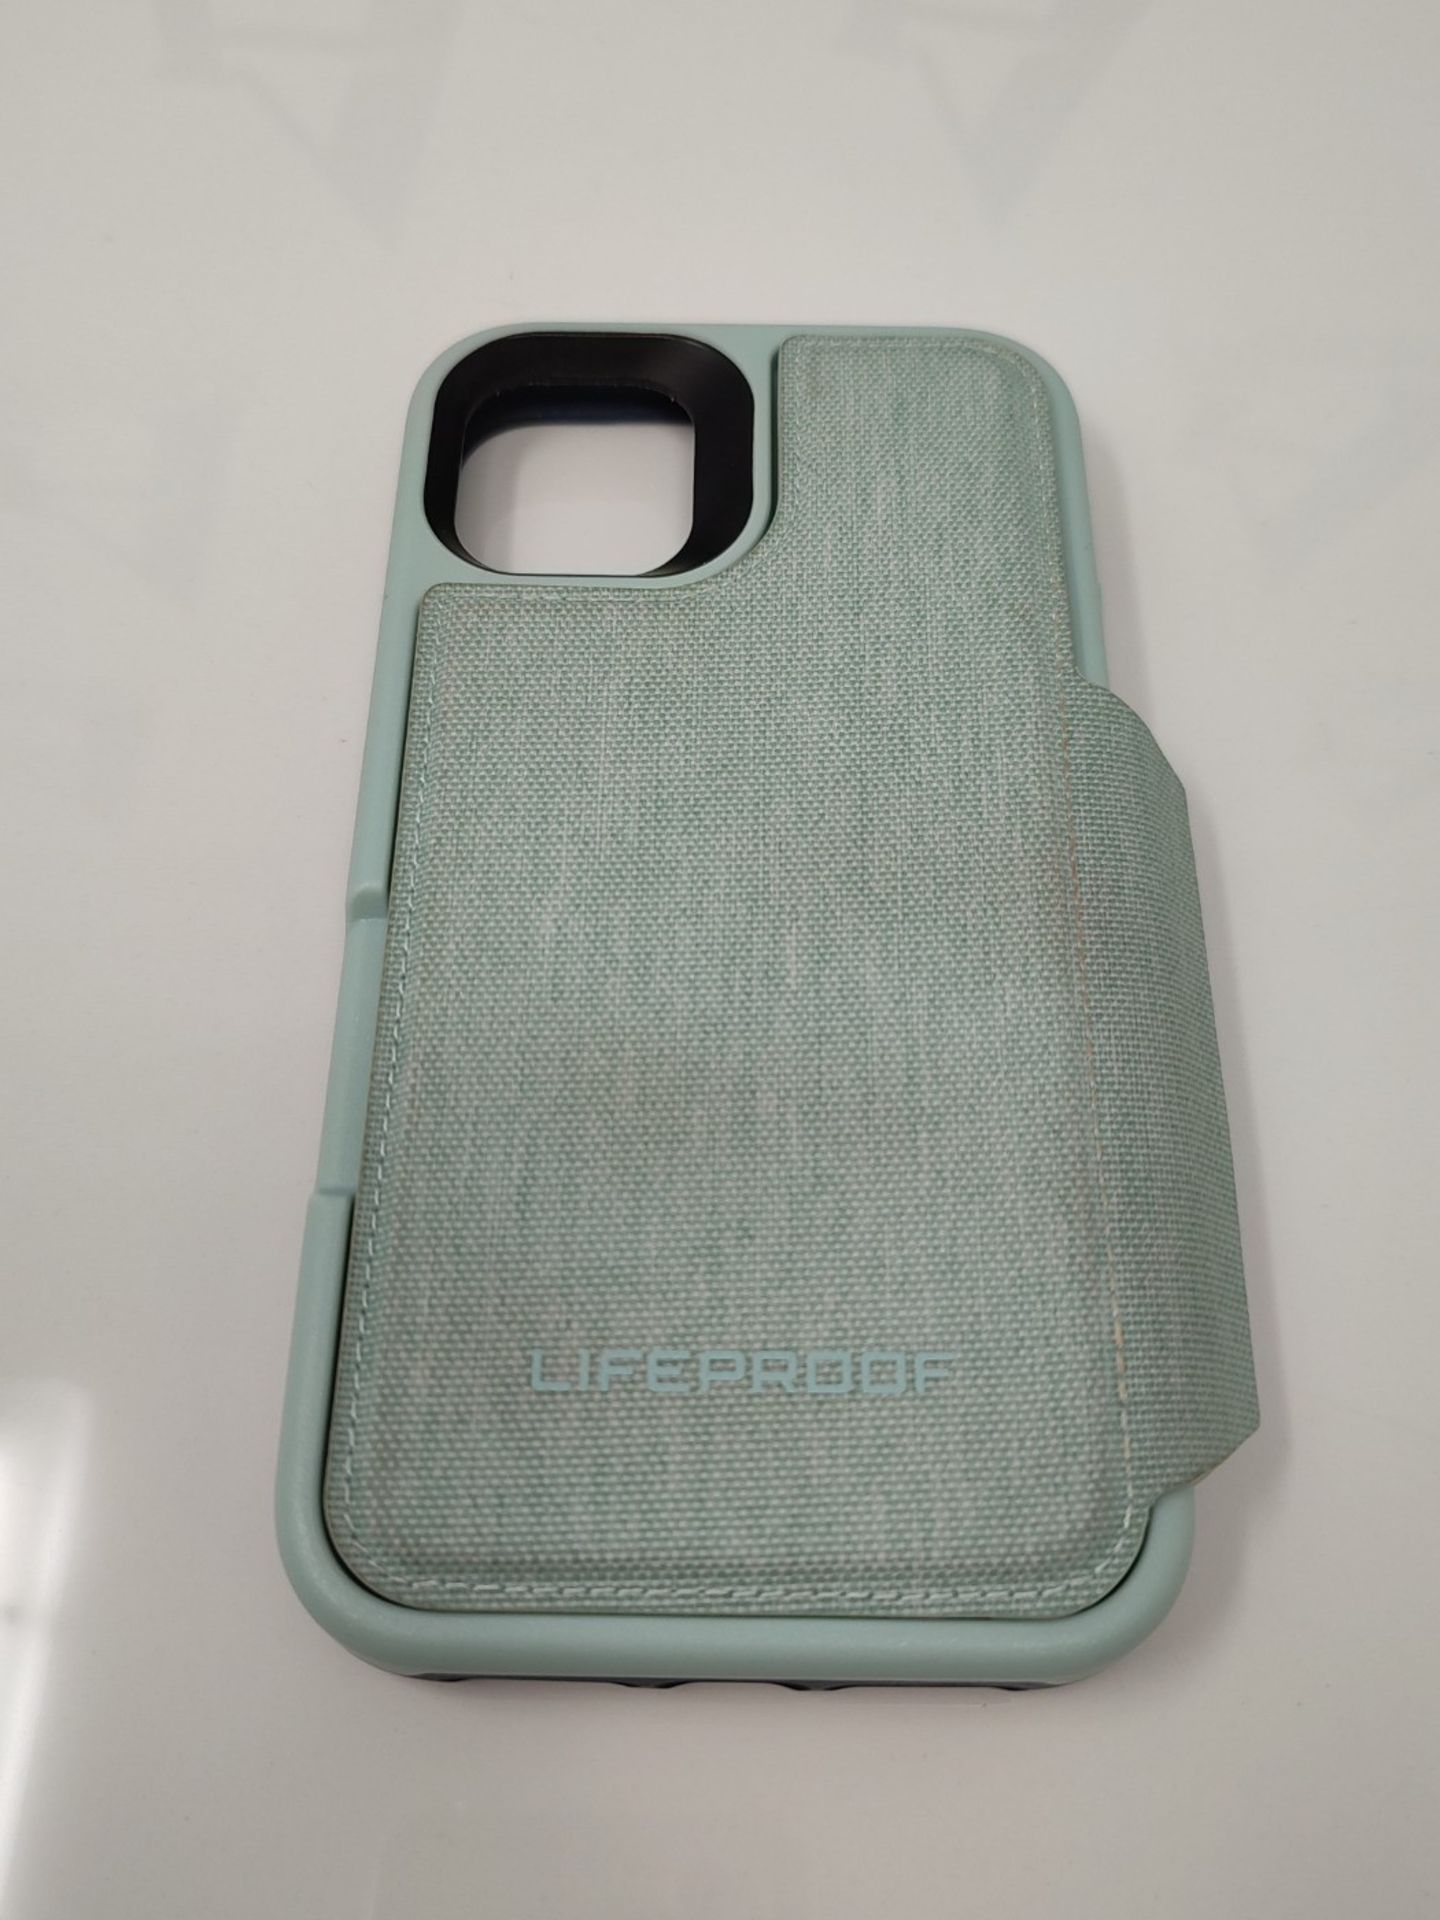 LifeProof Flip Wallet Case, Premium, Drop Protective Wallet Case for iPhone 11 - Water - Image 2 of 3